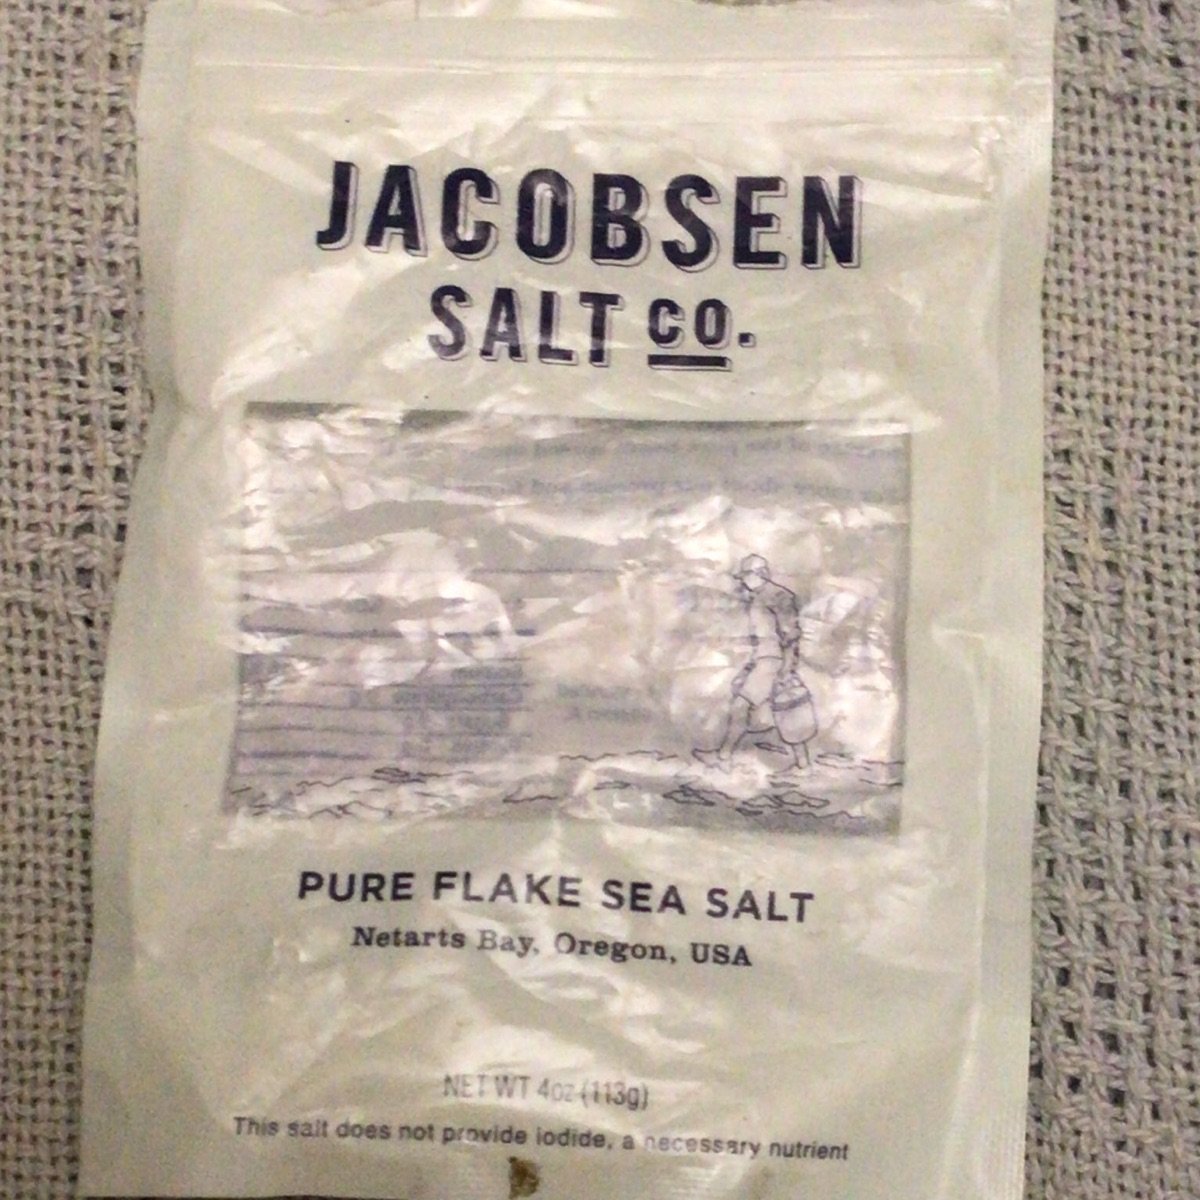 Jacobsen Salt Co. Pure Flake Sea Salt